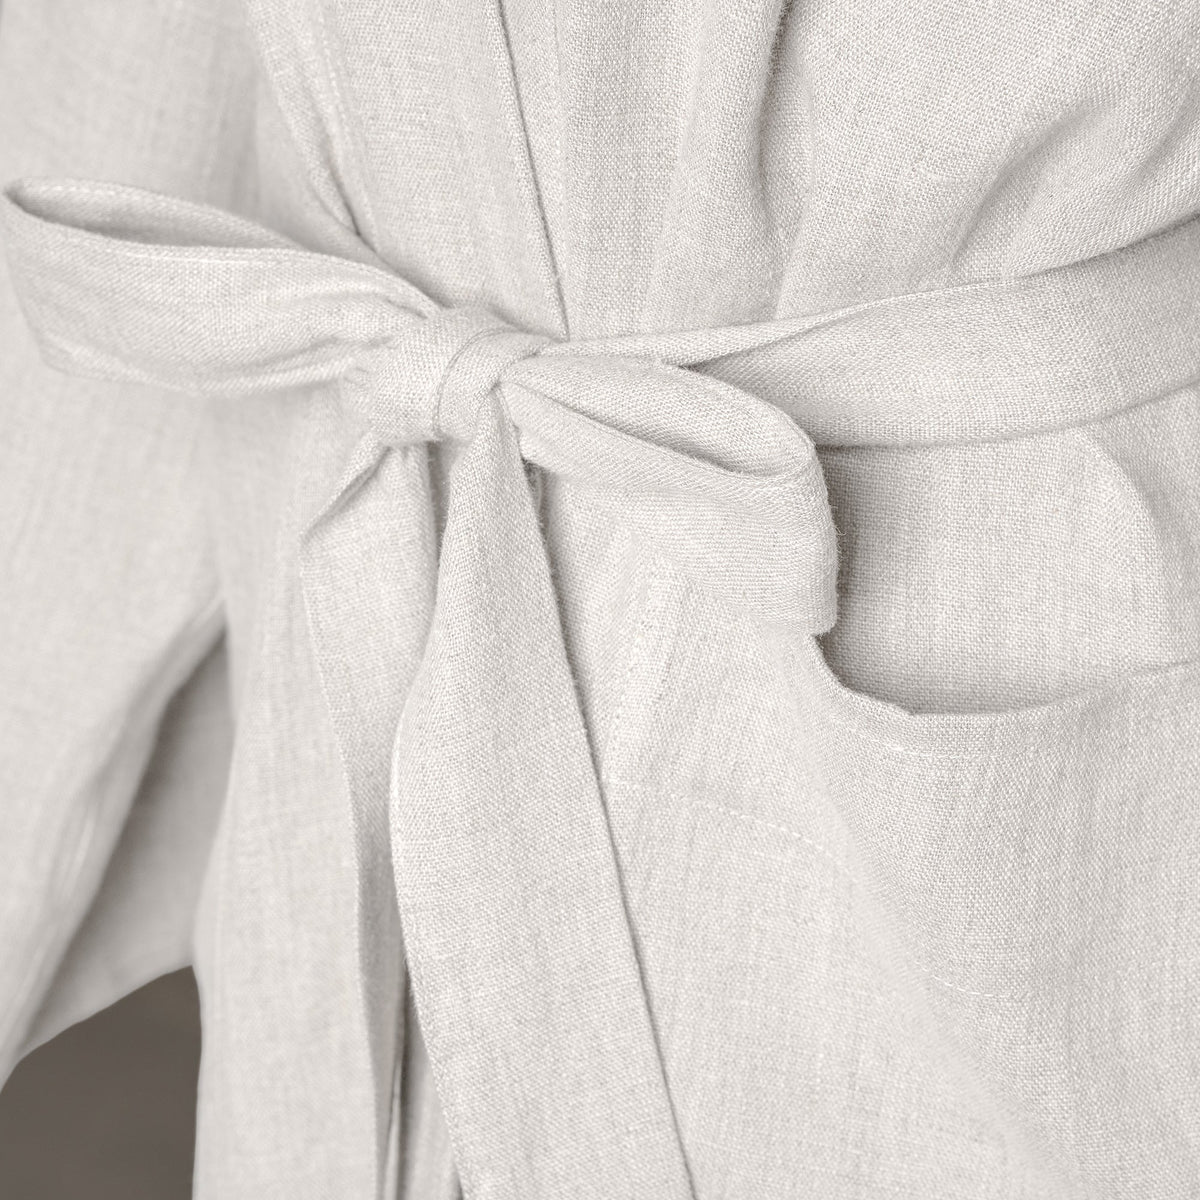 MENIQUE Women's 100% Linen Bath Robe